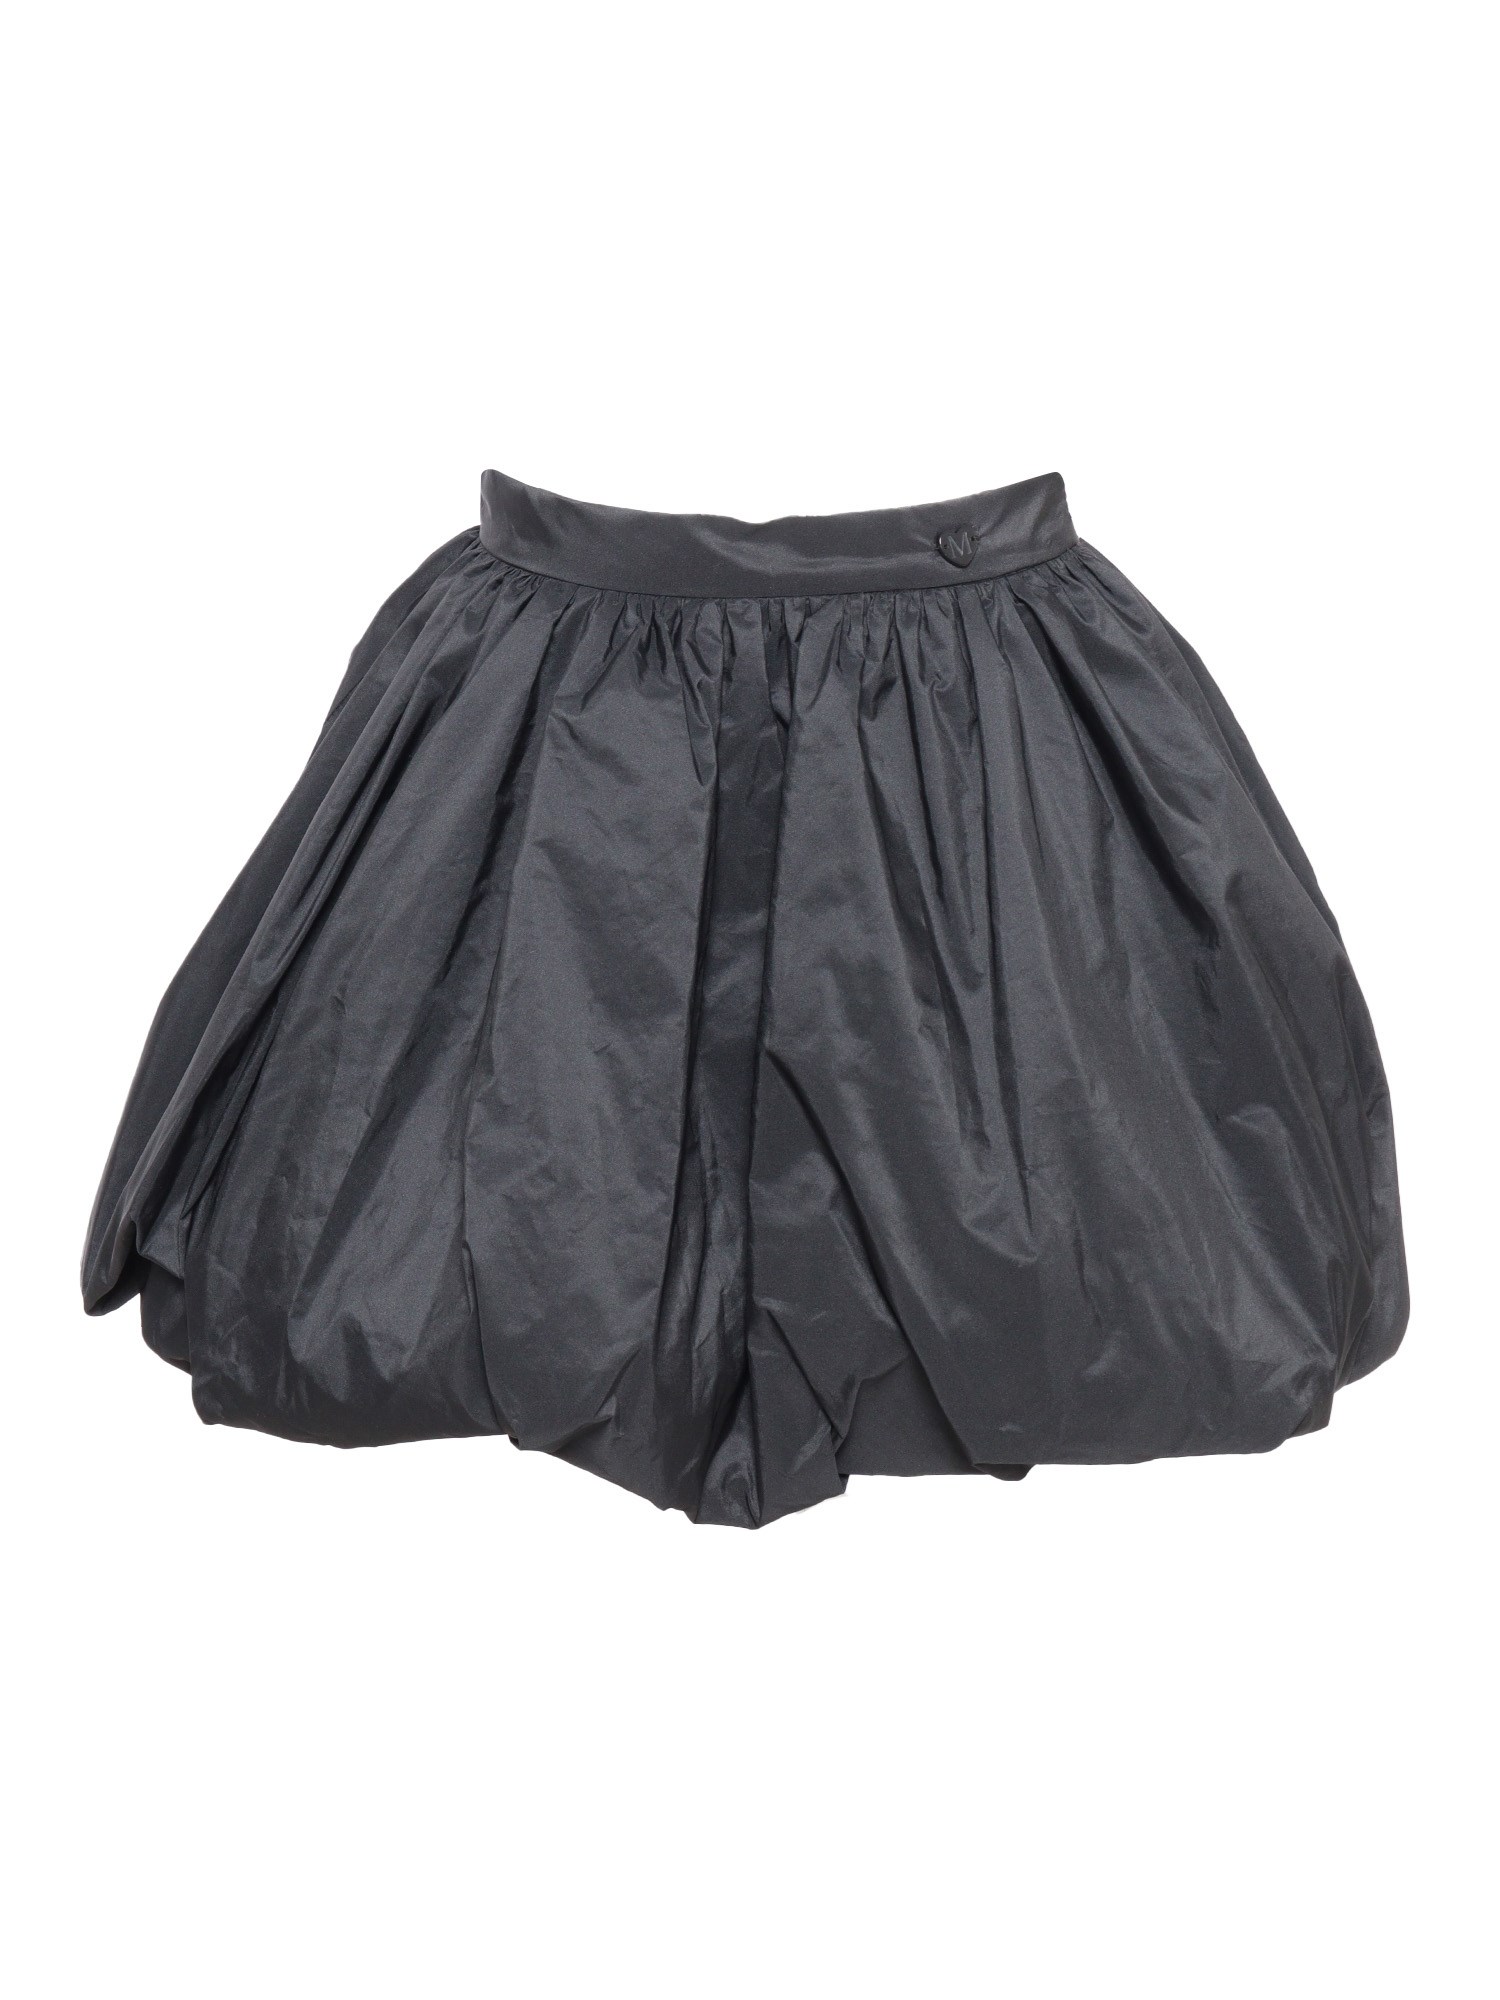 Monnalisa Black Baloon Skirt